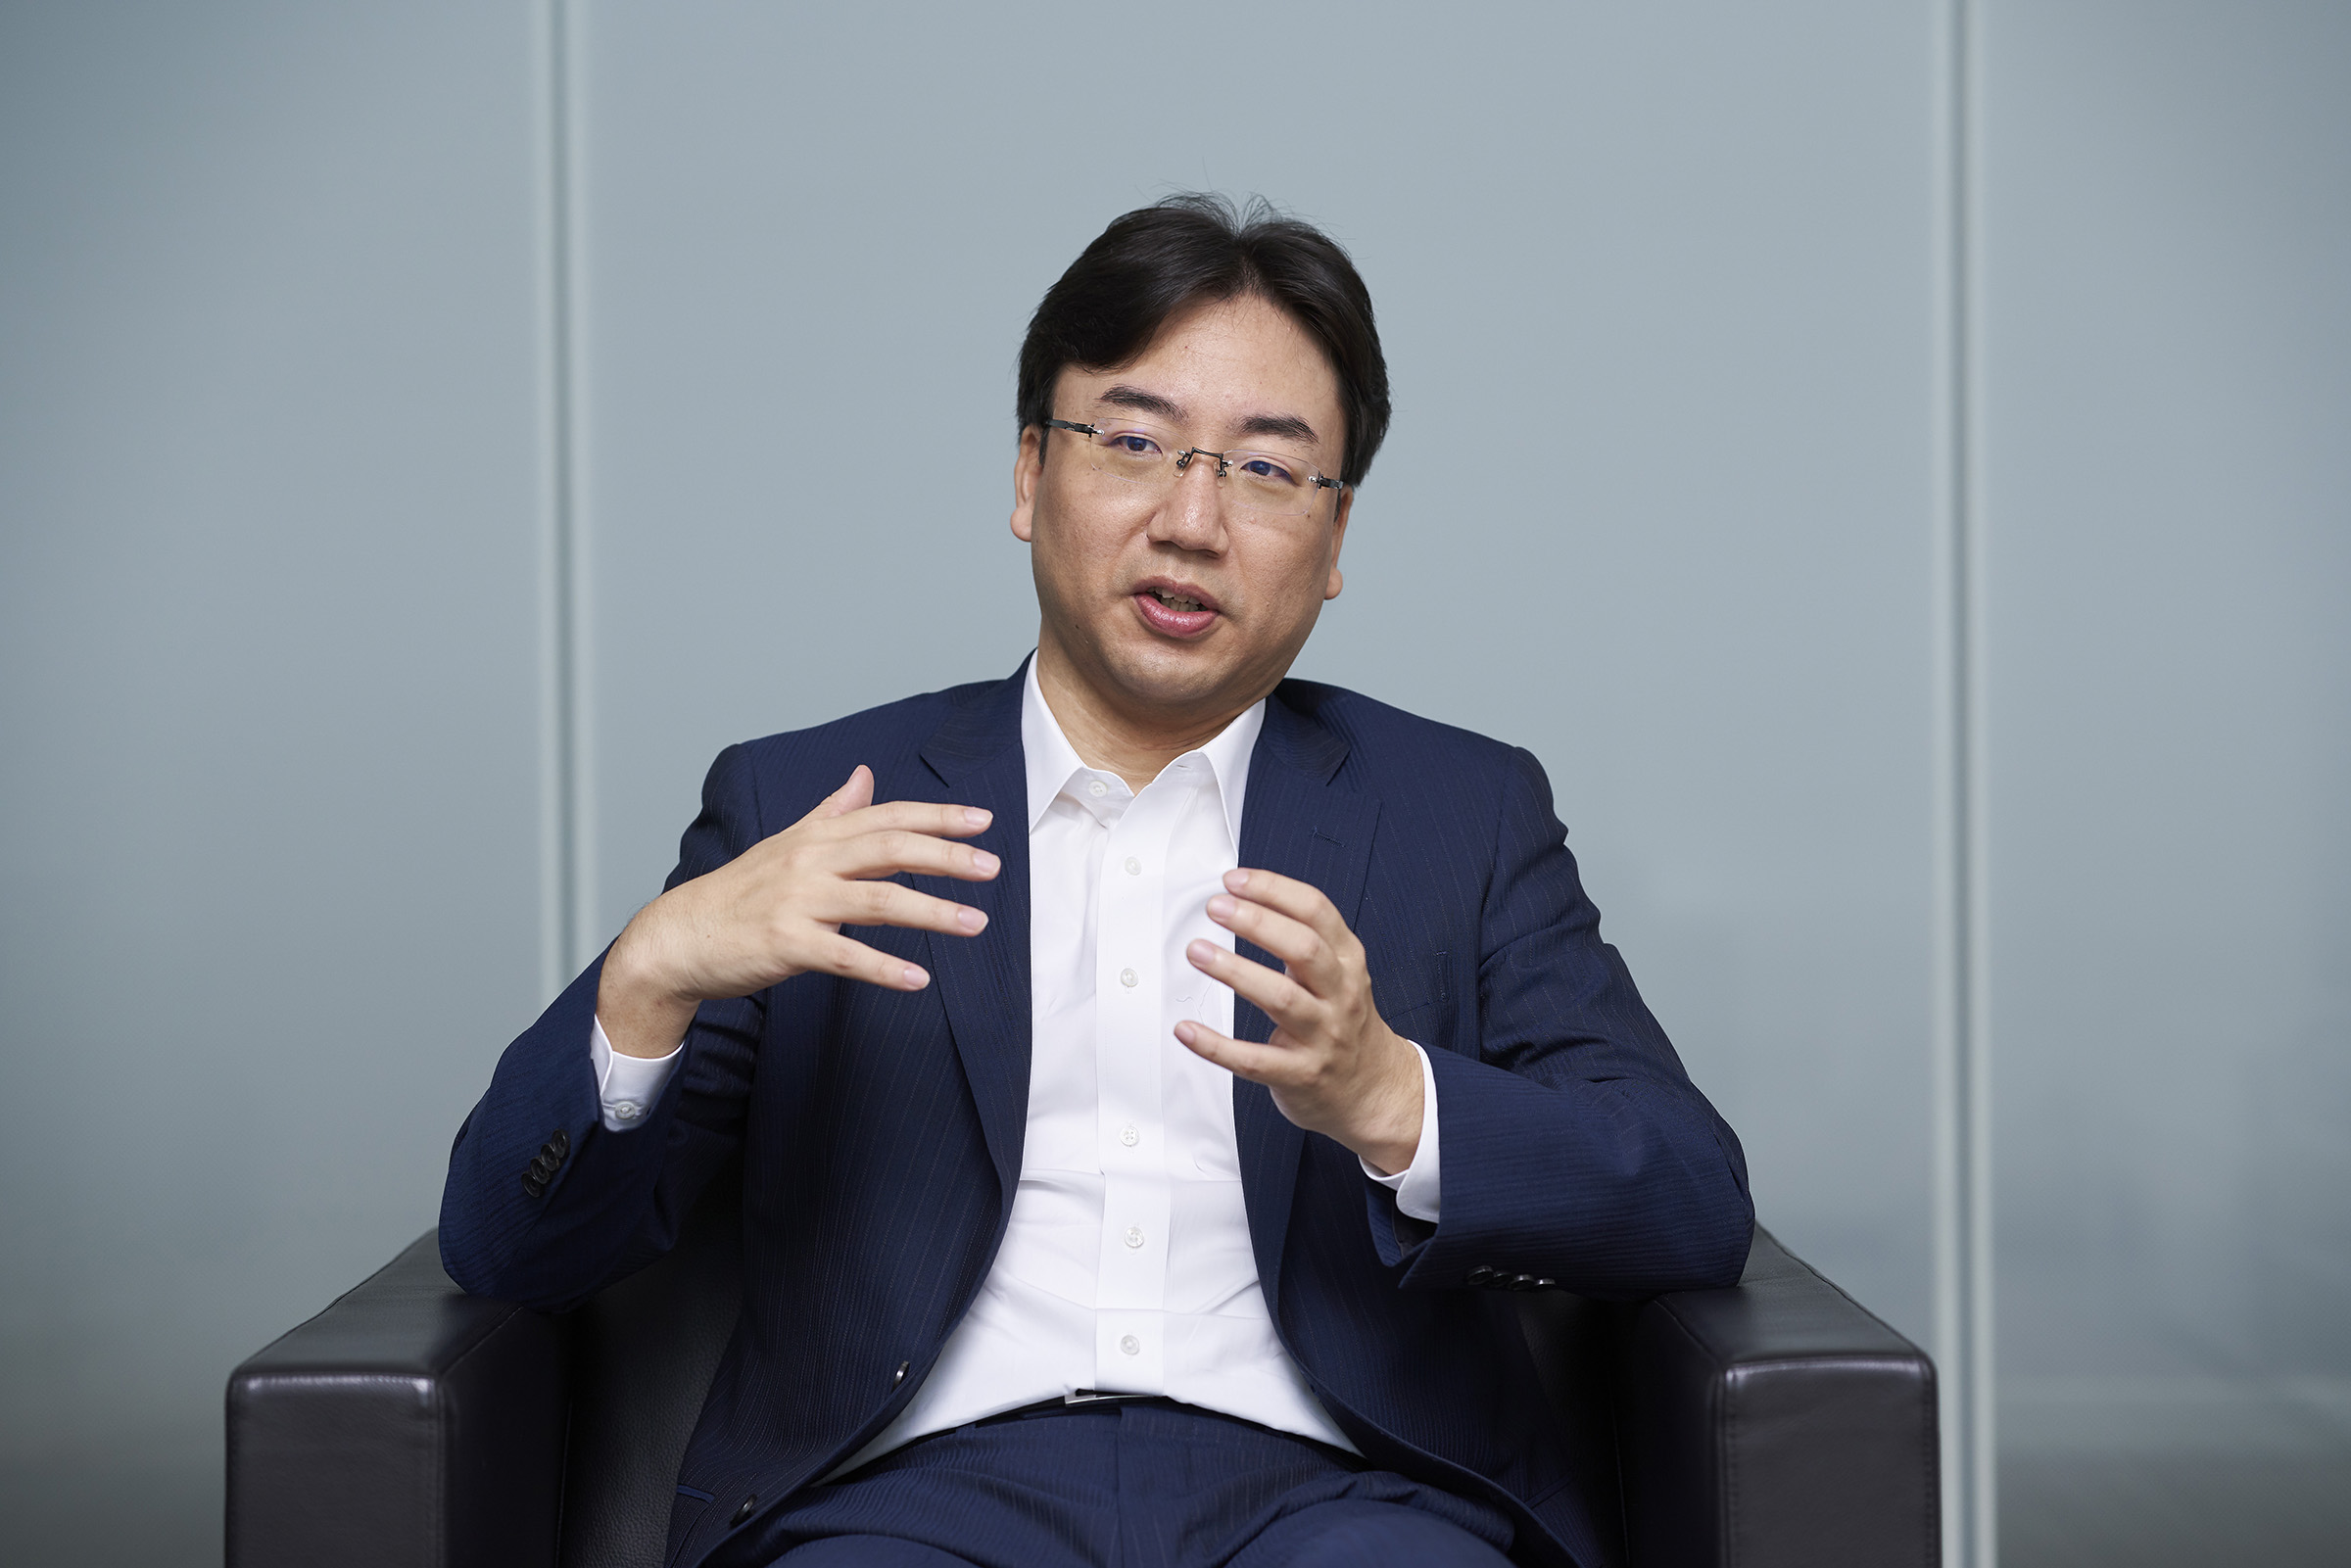 Shuntaro Furukawa, President of Nintendo Co., Ltd., photographed at Nintendo’s global headquarters in Kyoto, Japan, on Oct. 10, 2019. (Nintendo)